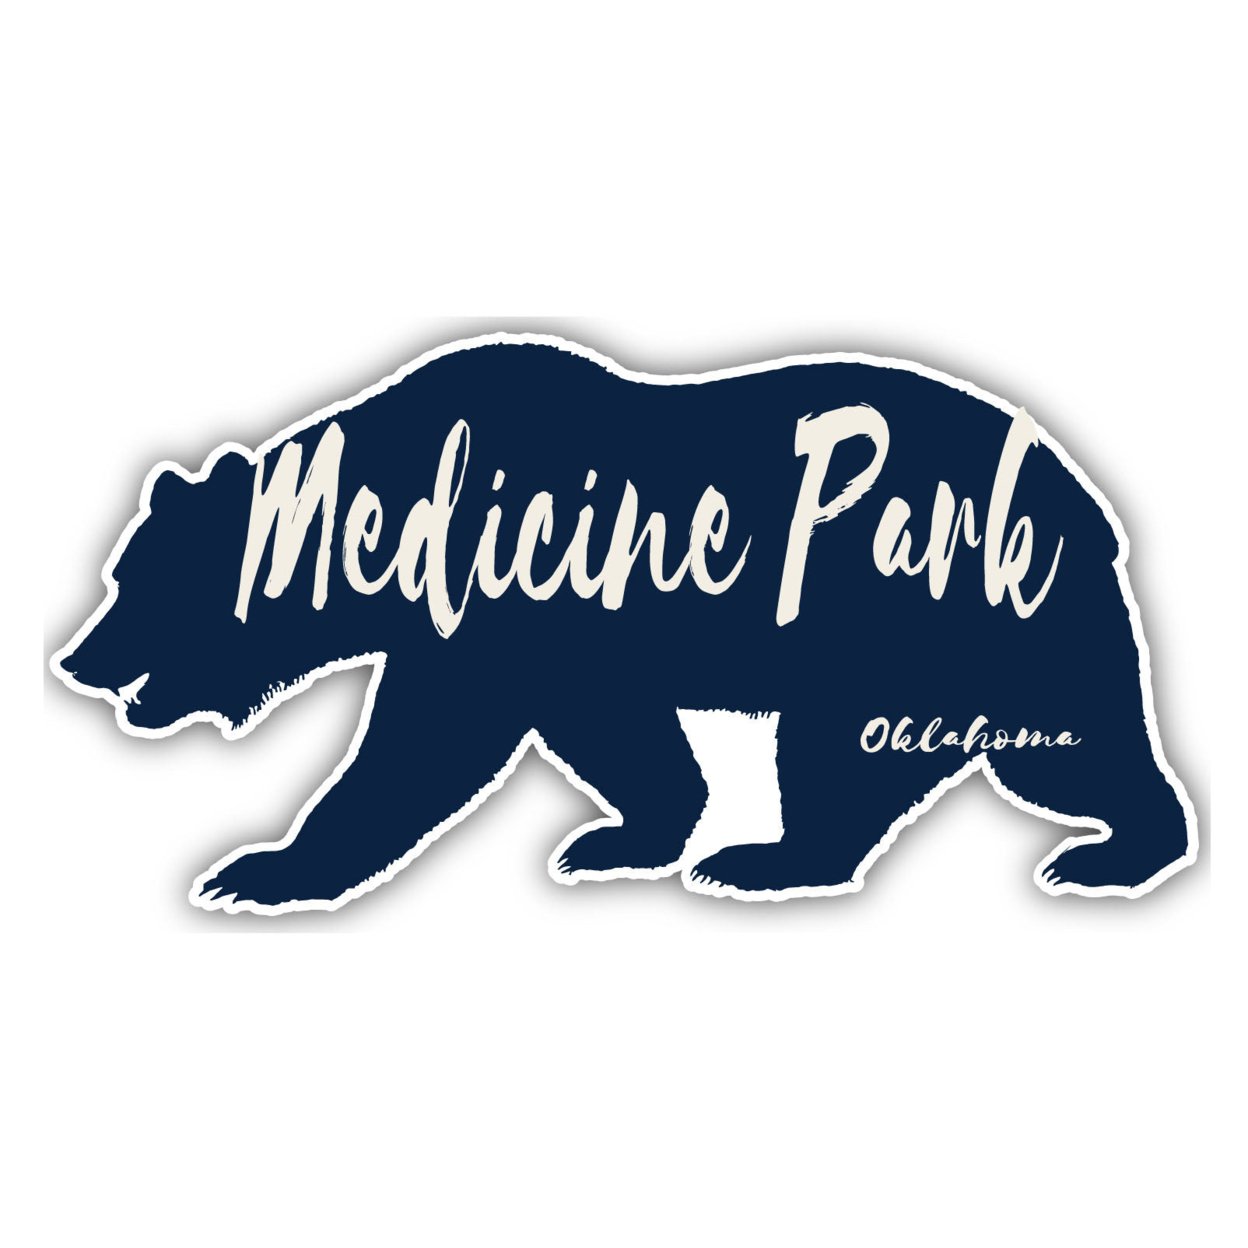 Medicine Park Oklahoma Souvenir Decorative Stickers (Choose Theme And Size) - 2-Inch, Adventures Awaits